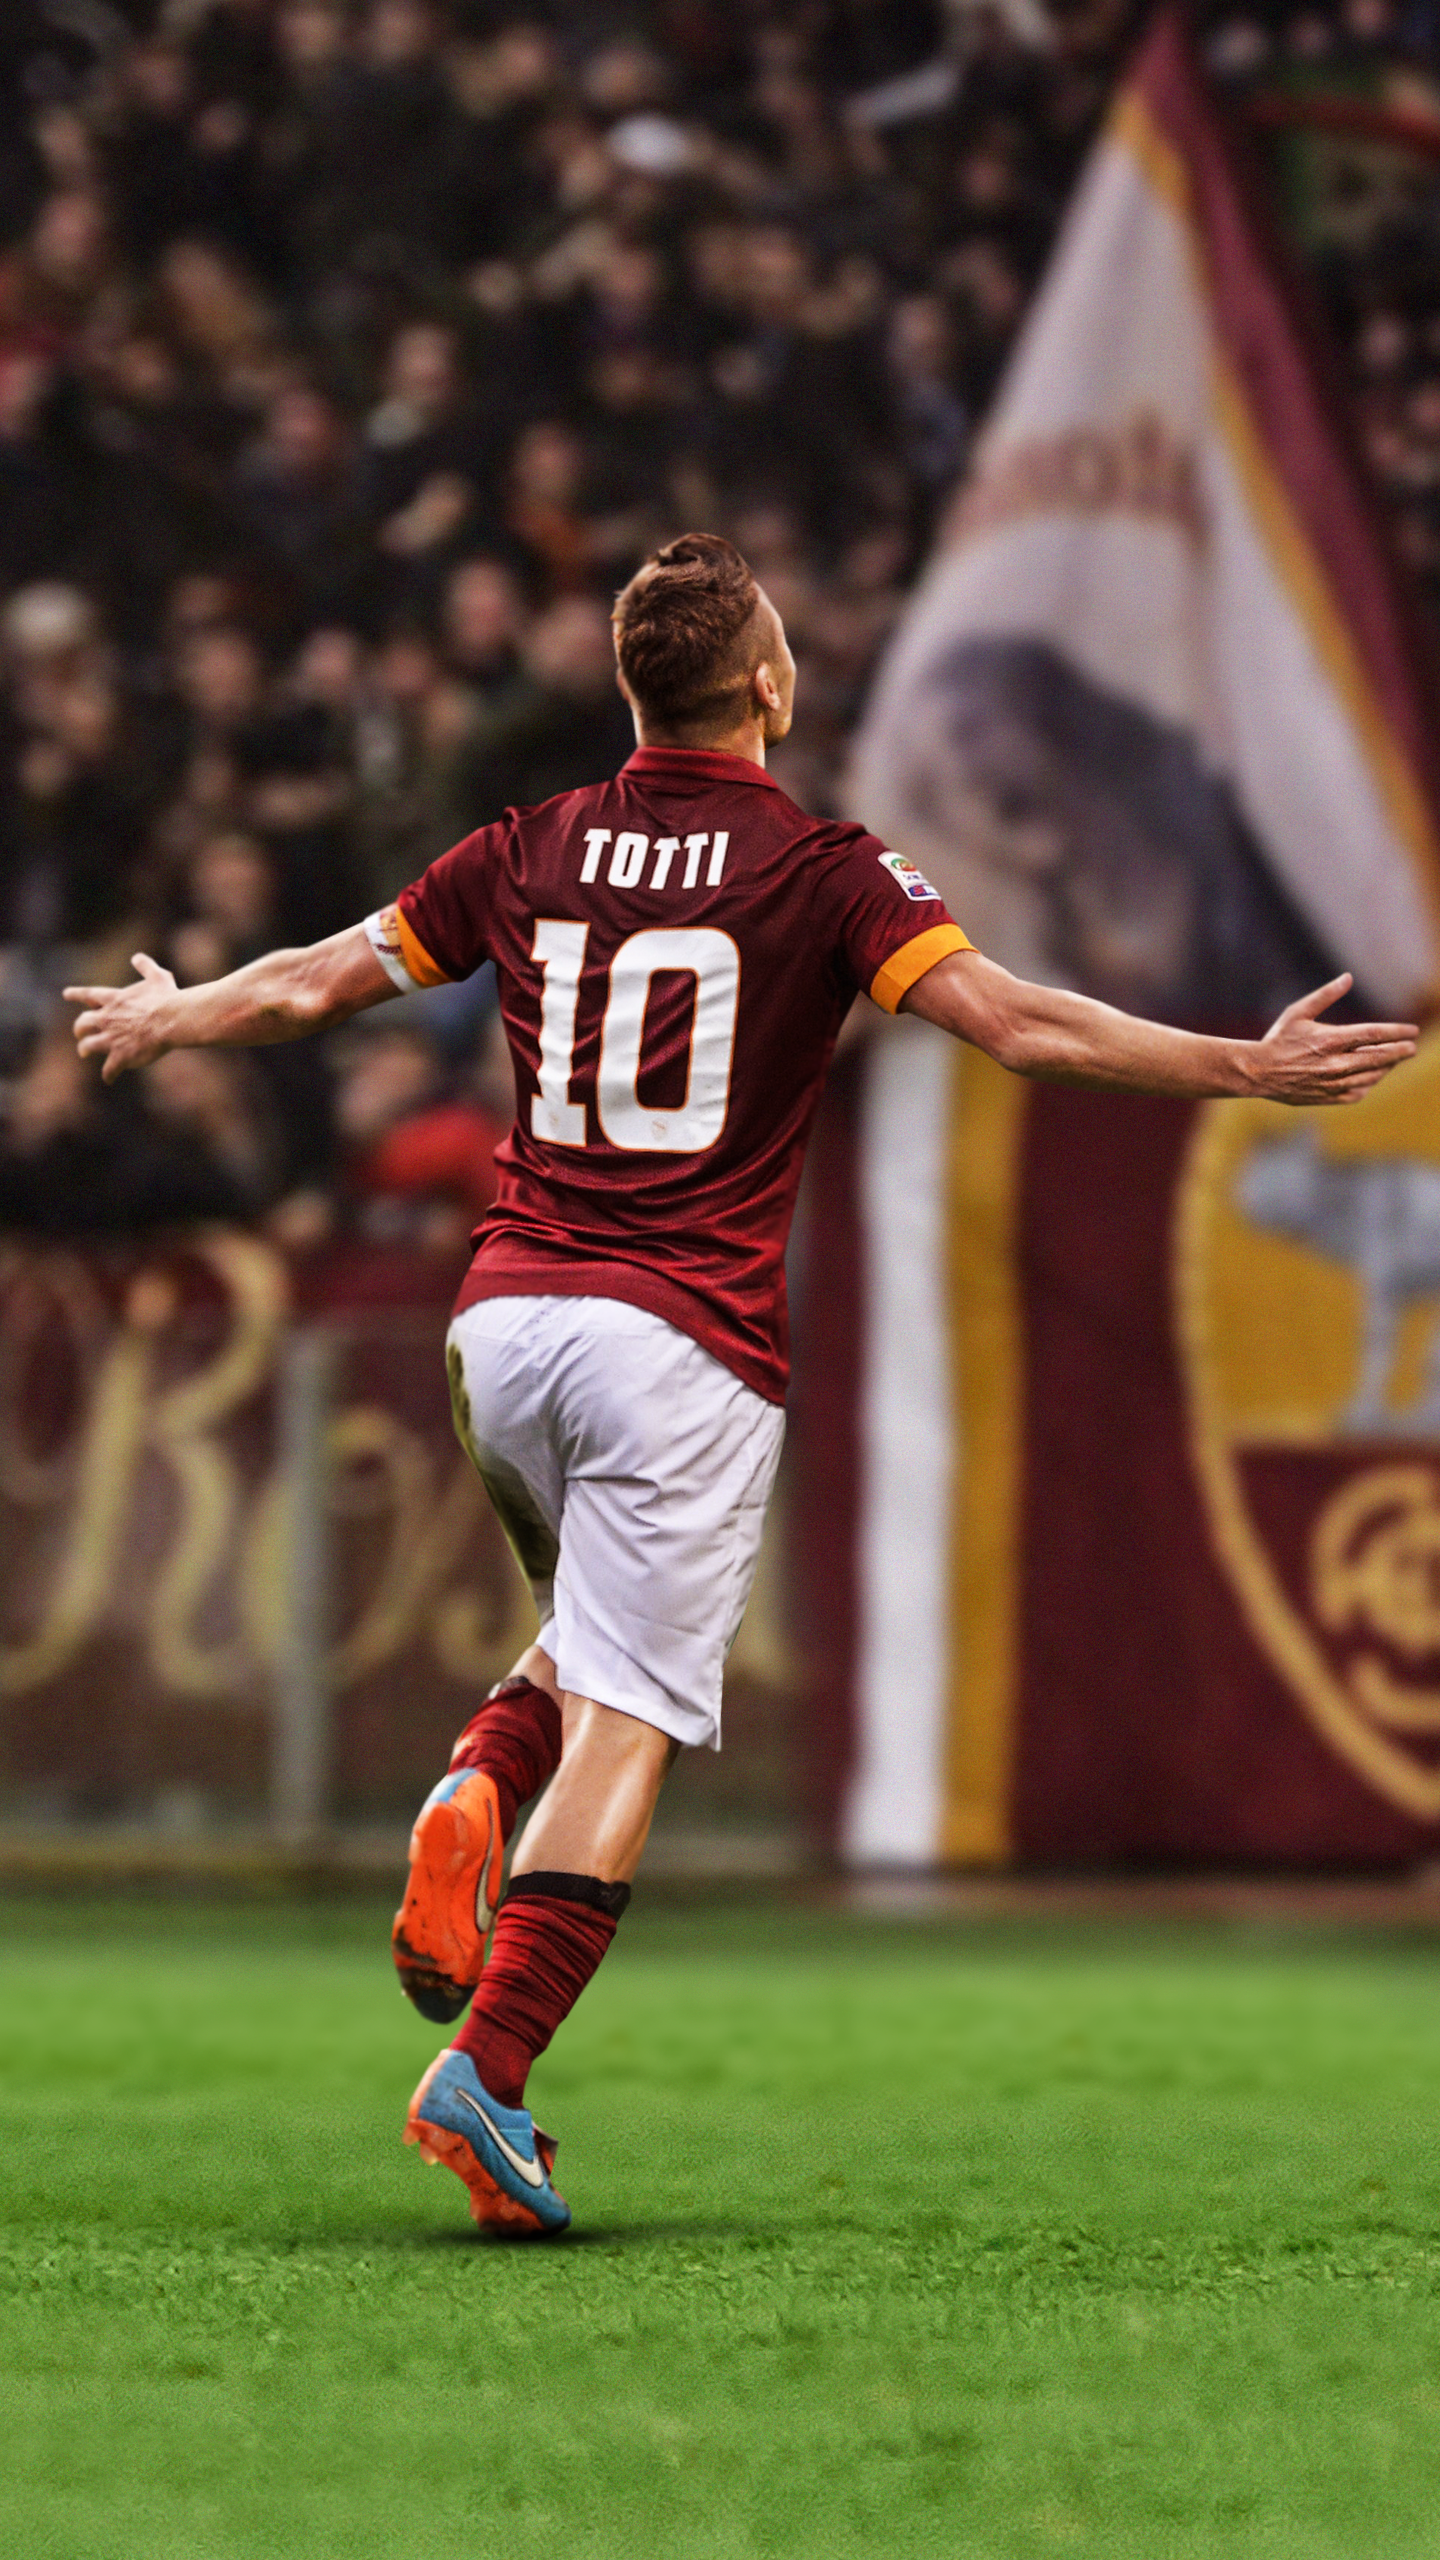 Francesco Totti - Roma Legend by Emilio Sansolini